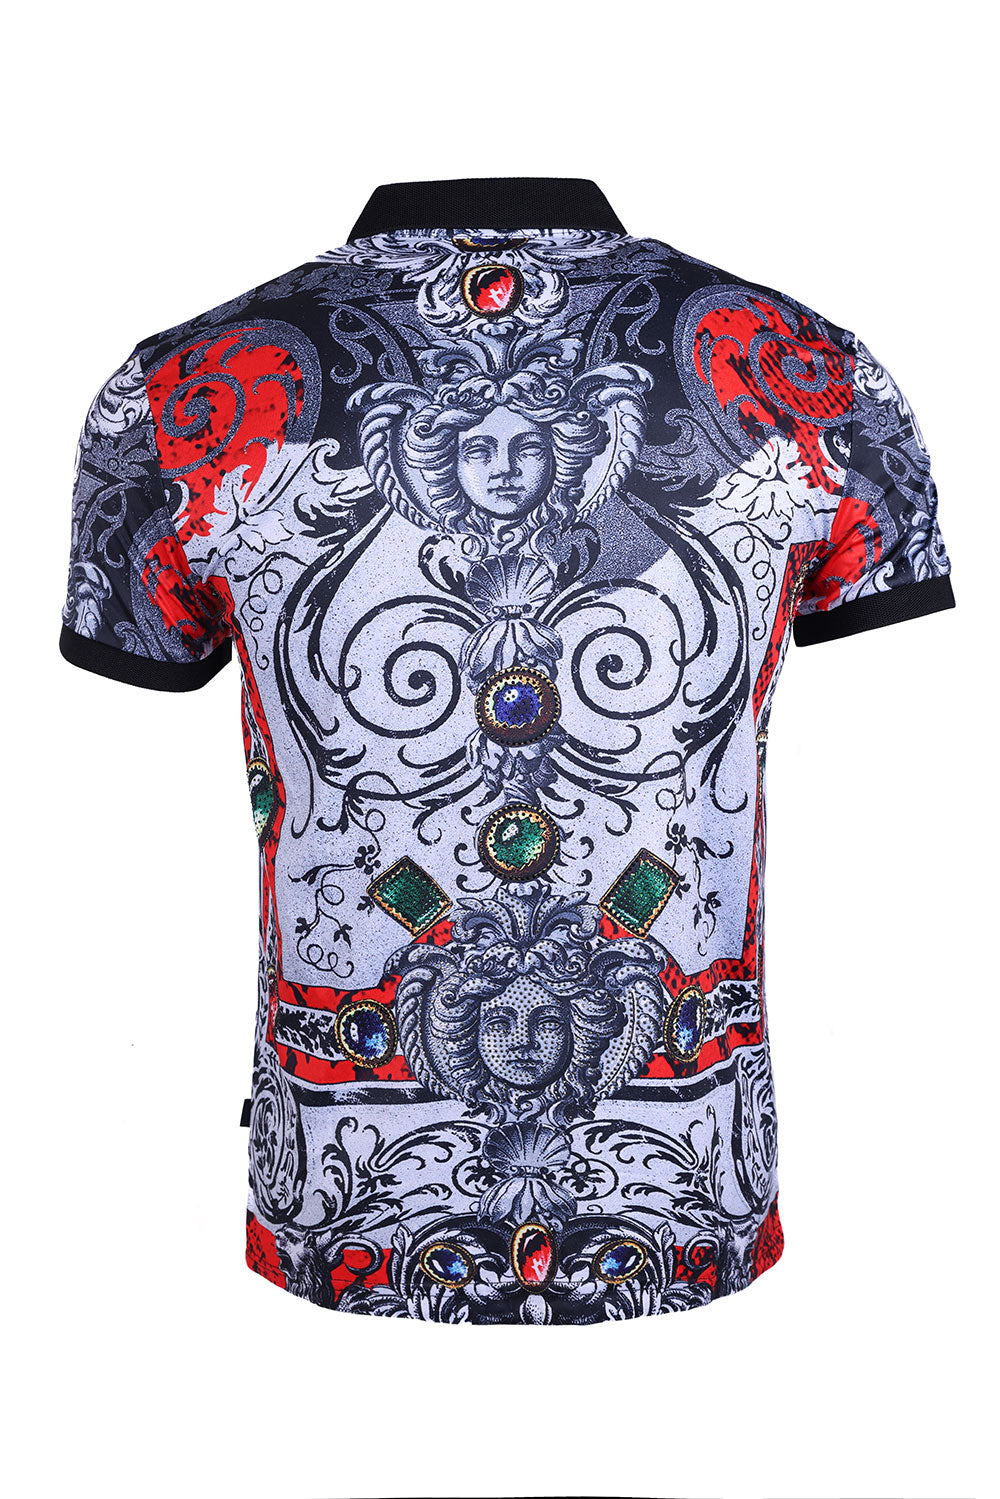 Barabas Men's Medusa Rhinestone Gem Printed Baroque Polo Shirt PSP2024 Black Red